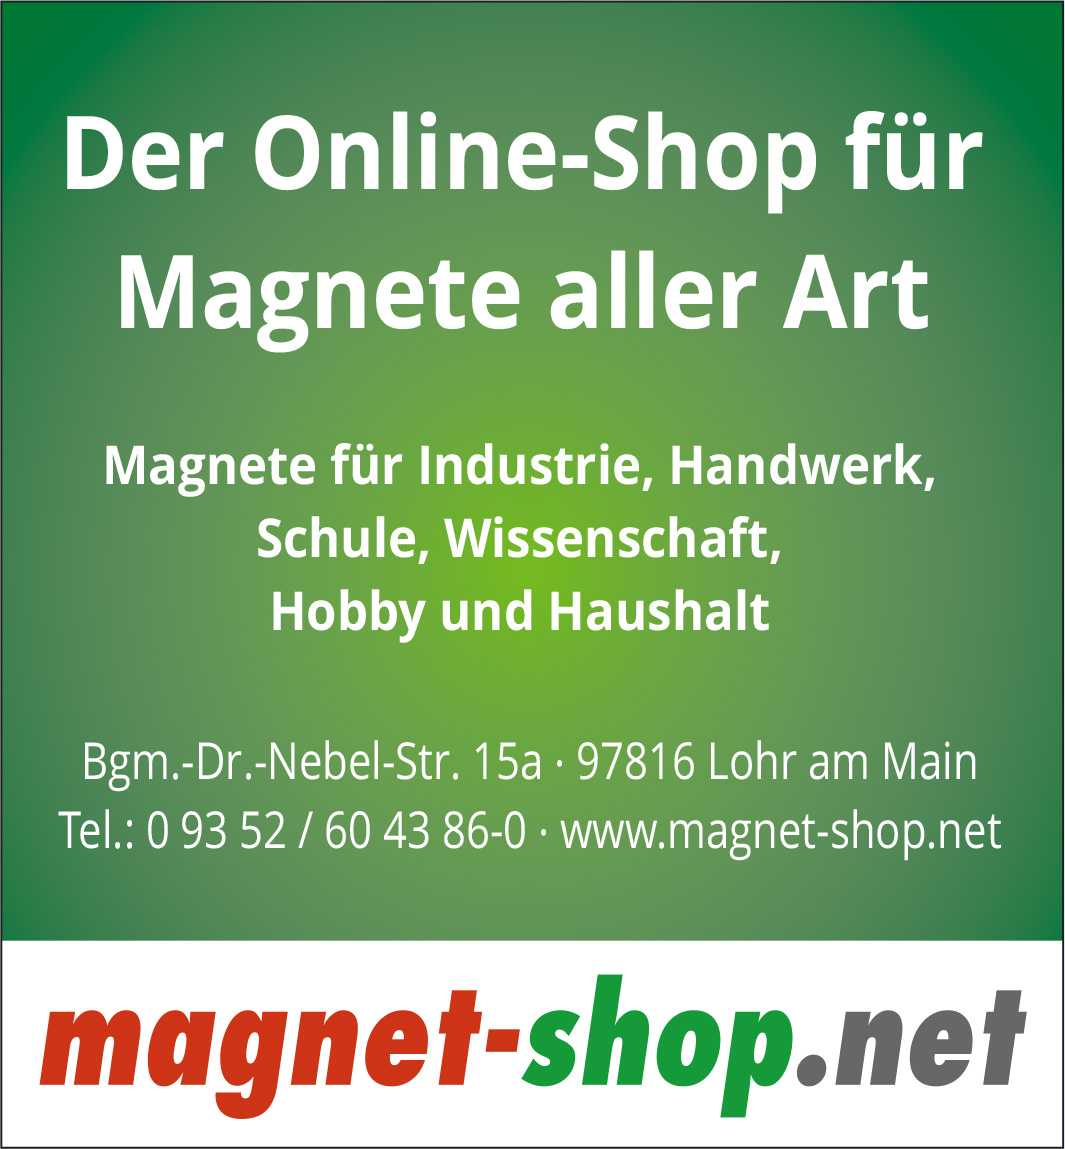 Magnet-Shop